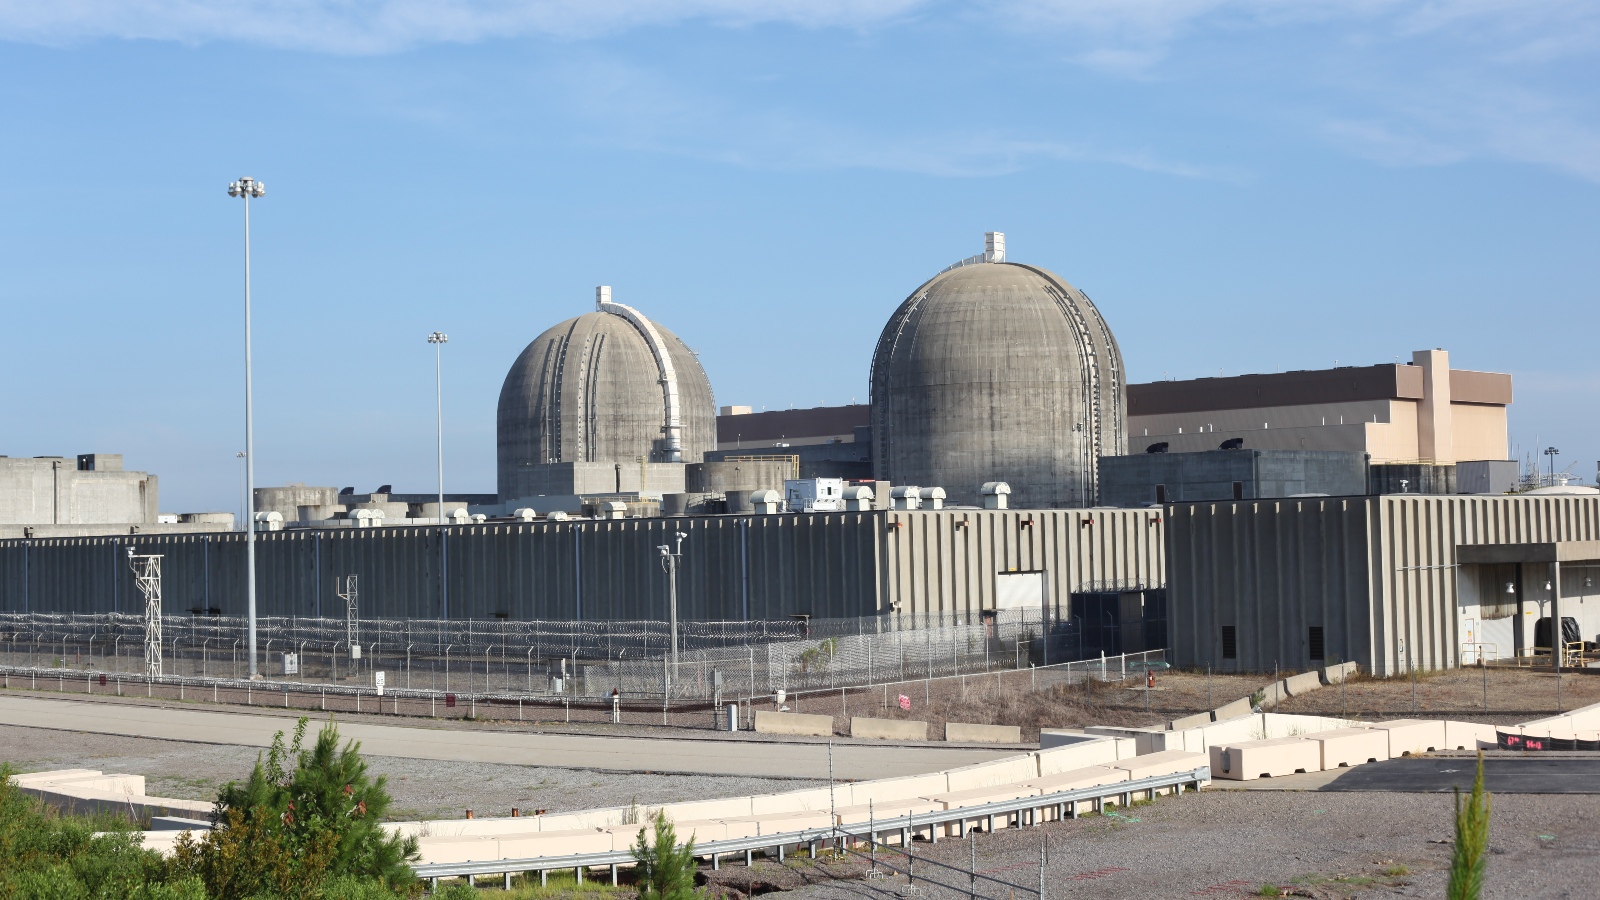 Vogtle is a 2-unit nuclear power plant located in Burke County, near Waynesboro, Georgia.